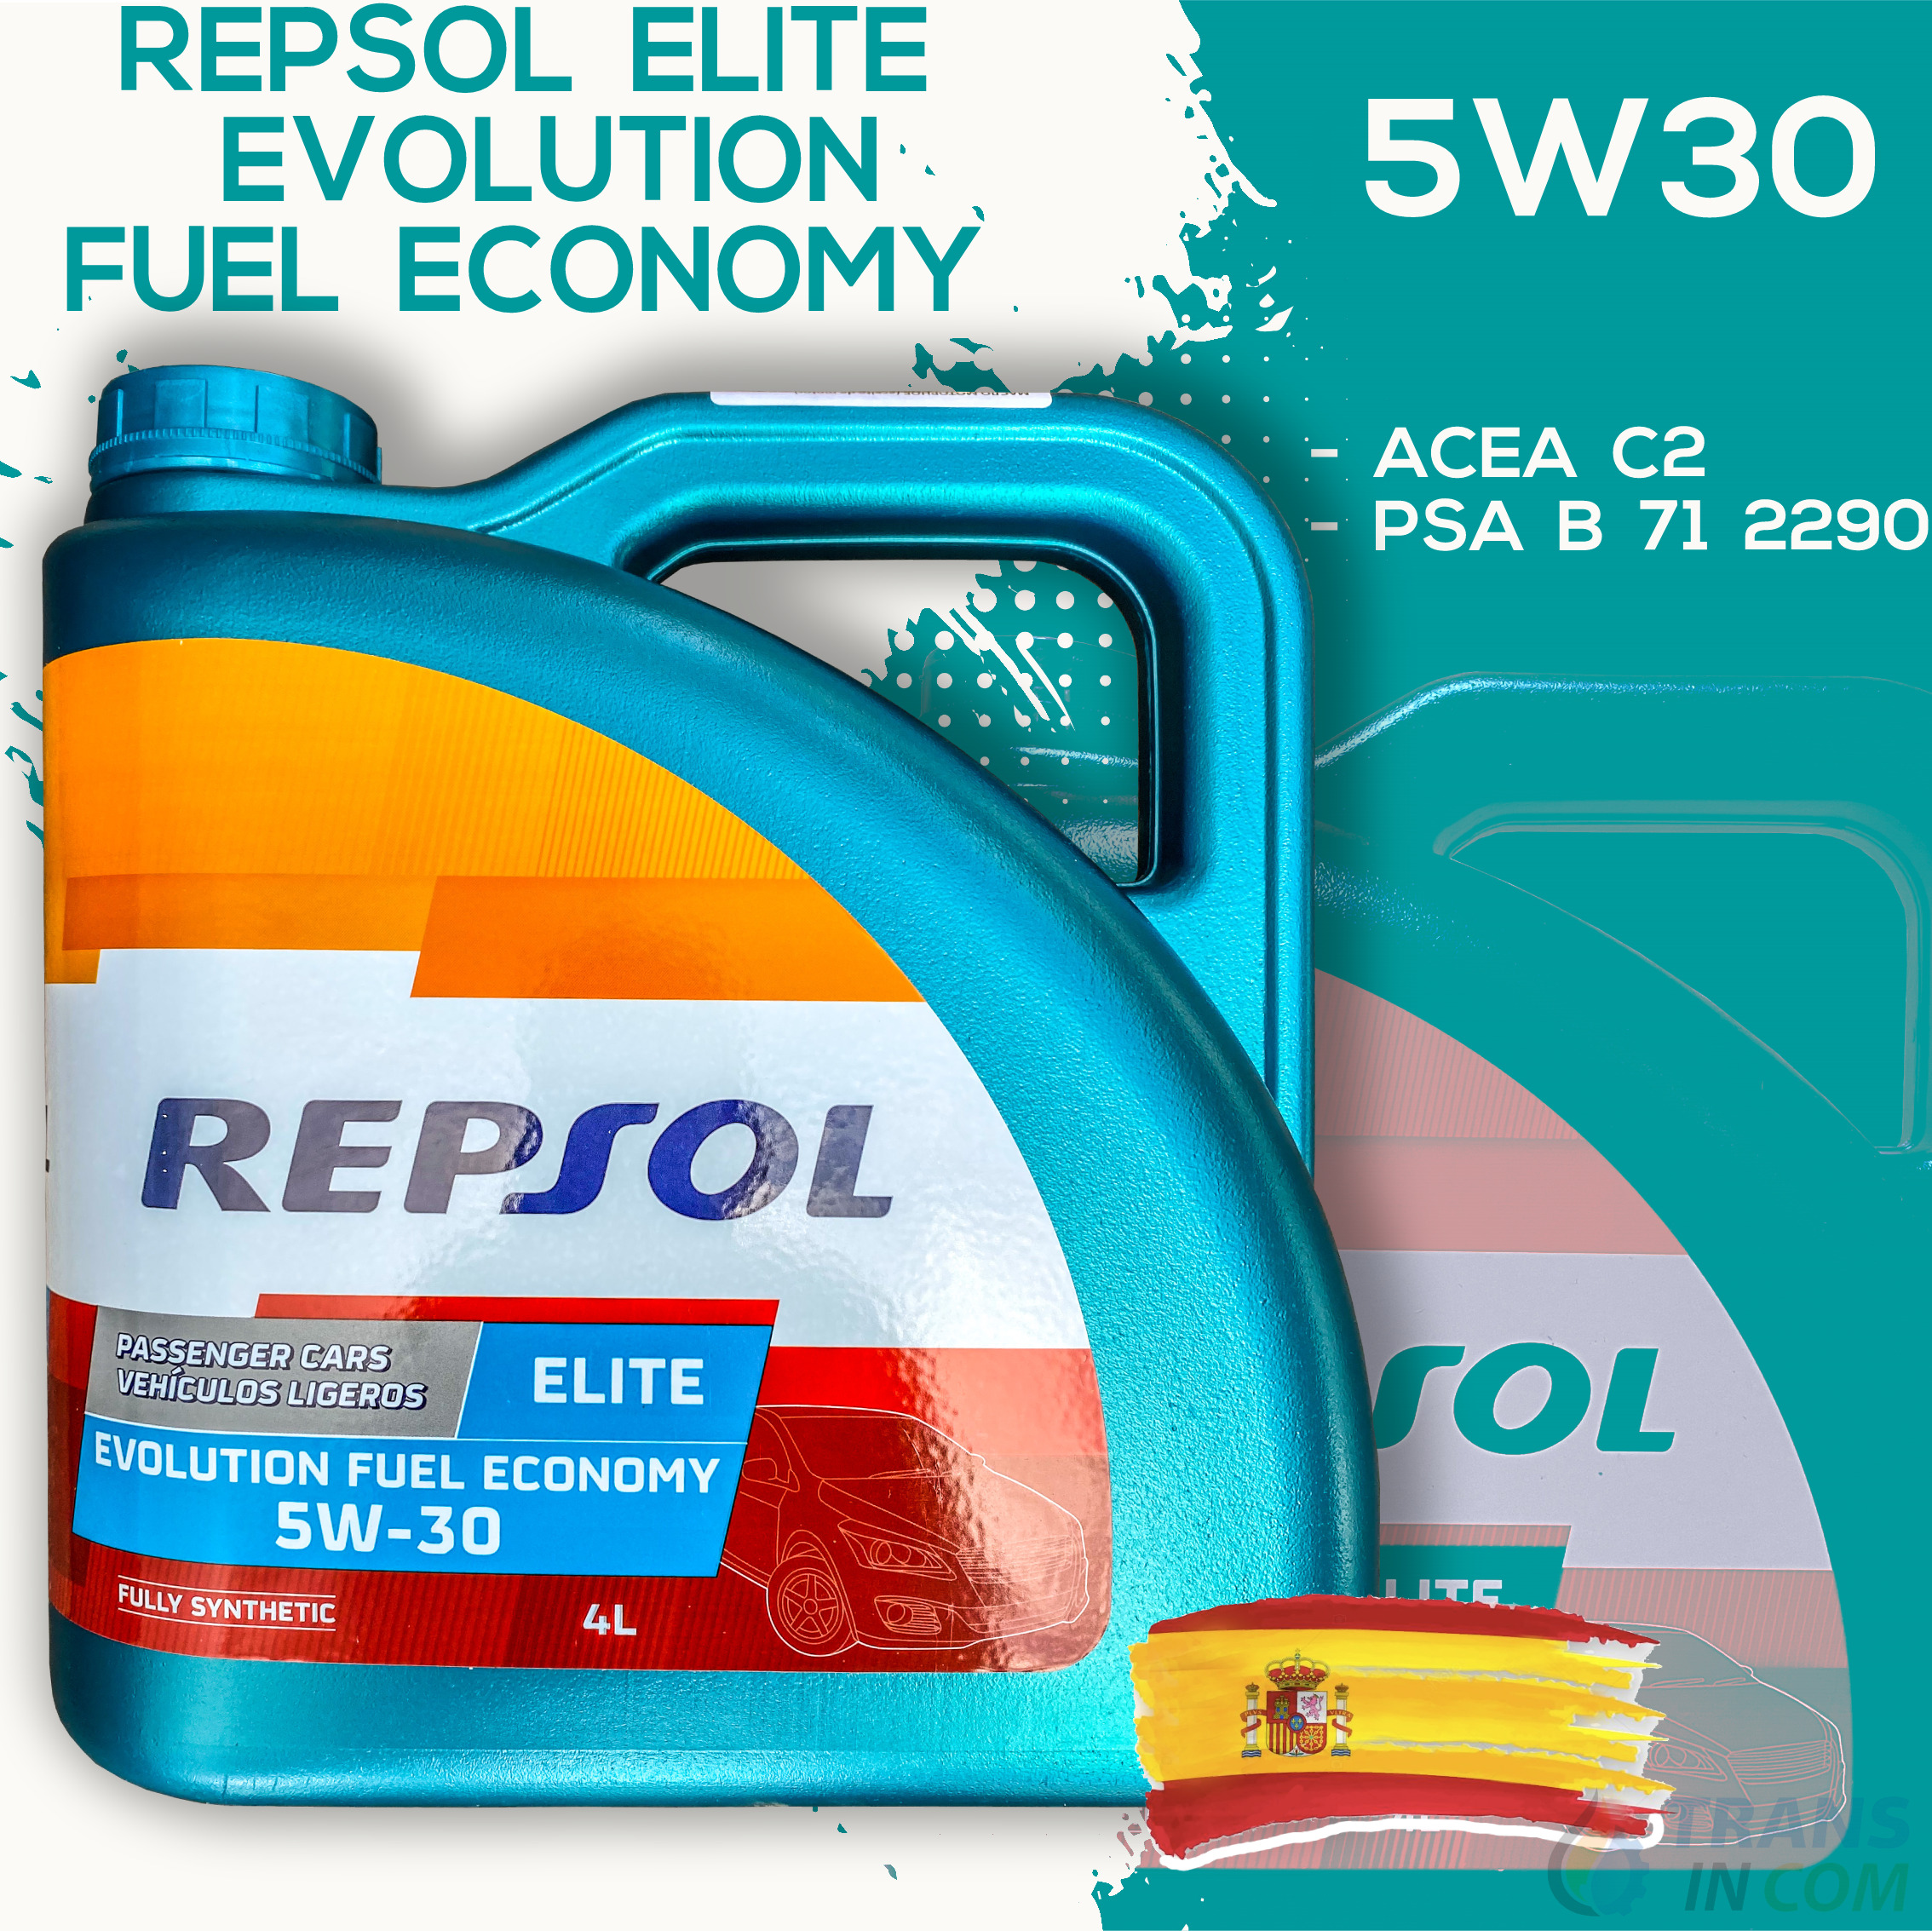 Repsol long life 5w 30. Repsol Elite Evolution fuel economy 5w30. Моторное масло Репсол 5w30 Evolution. Repsol Elite Evolution dx2 5w30 4л. Repsol Elite Evolution fuel economy 5w-30 (синт) c2 моторное масло 4л..